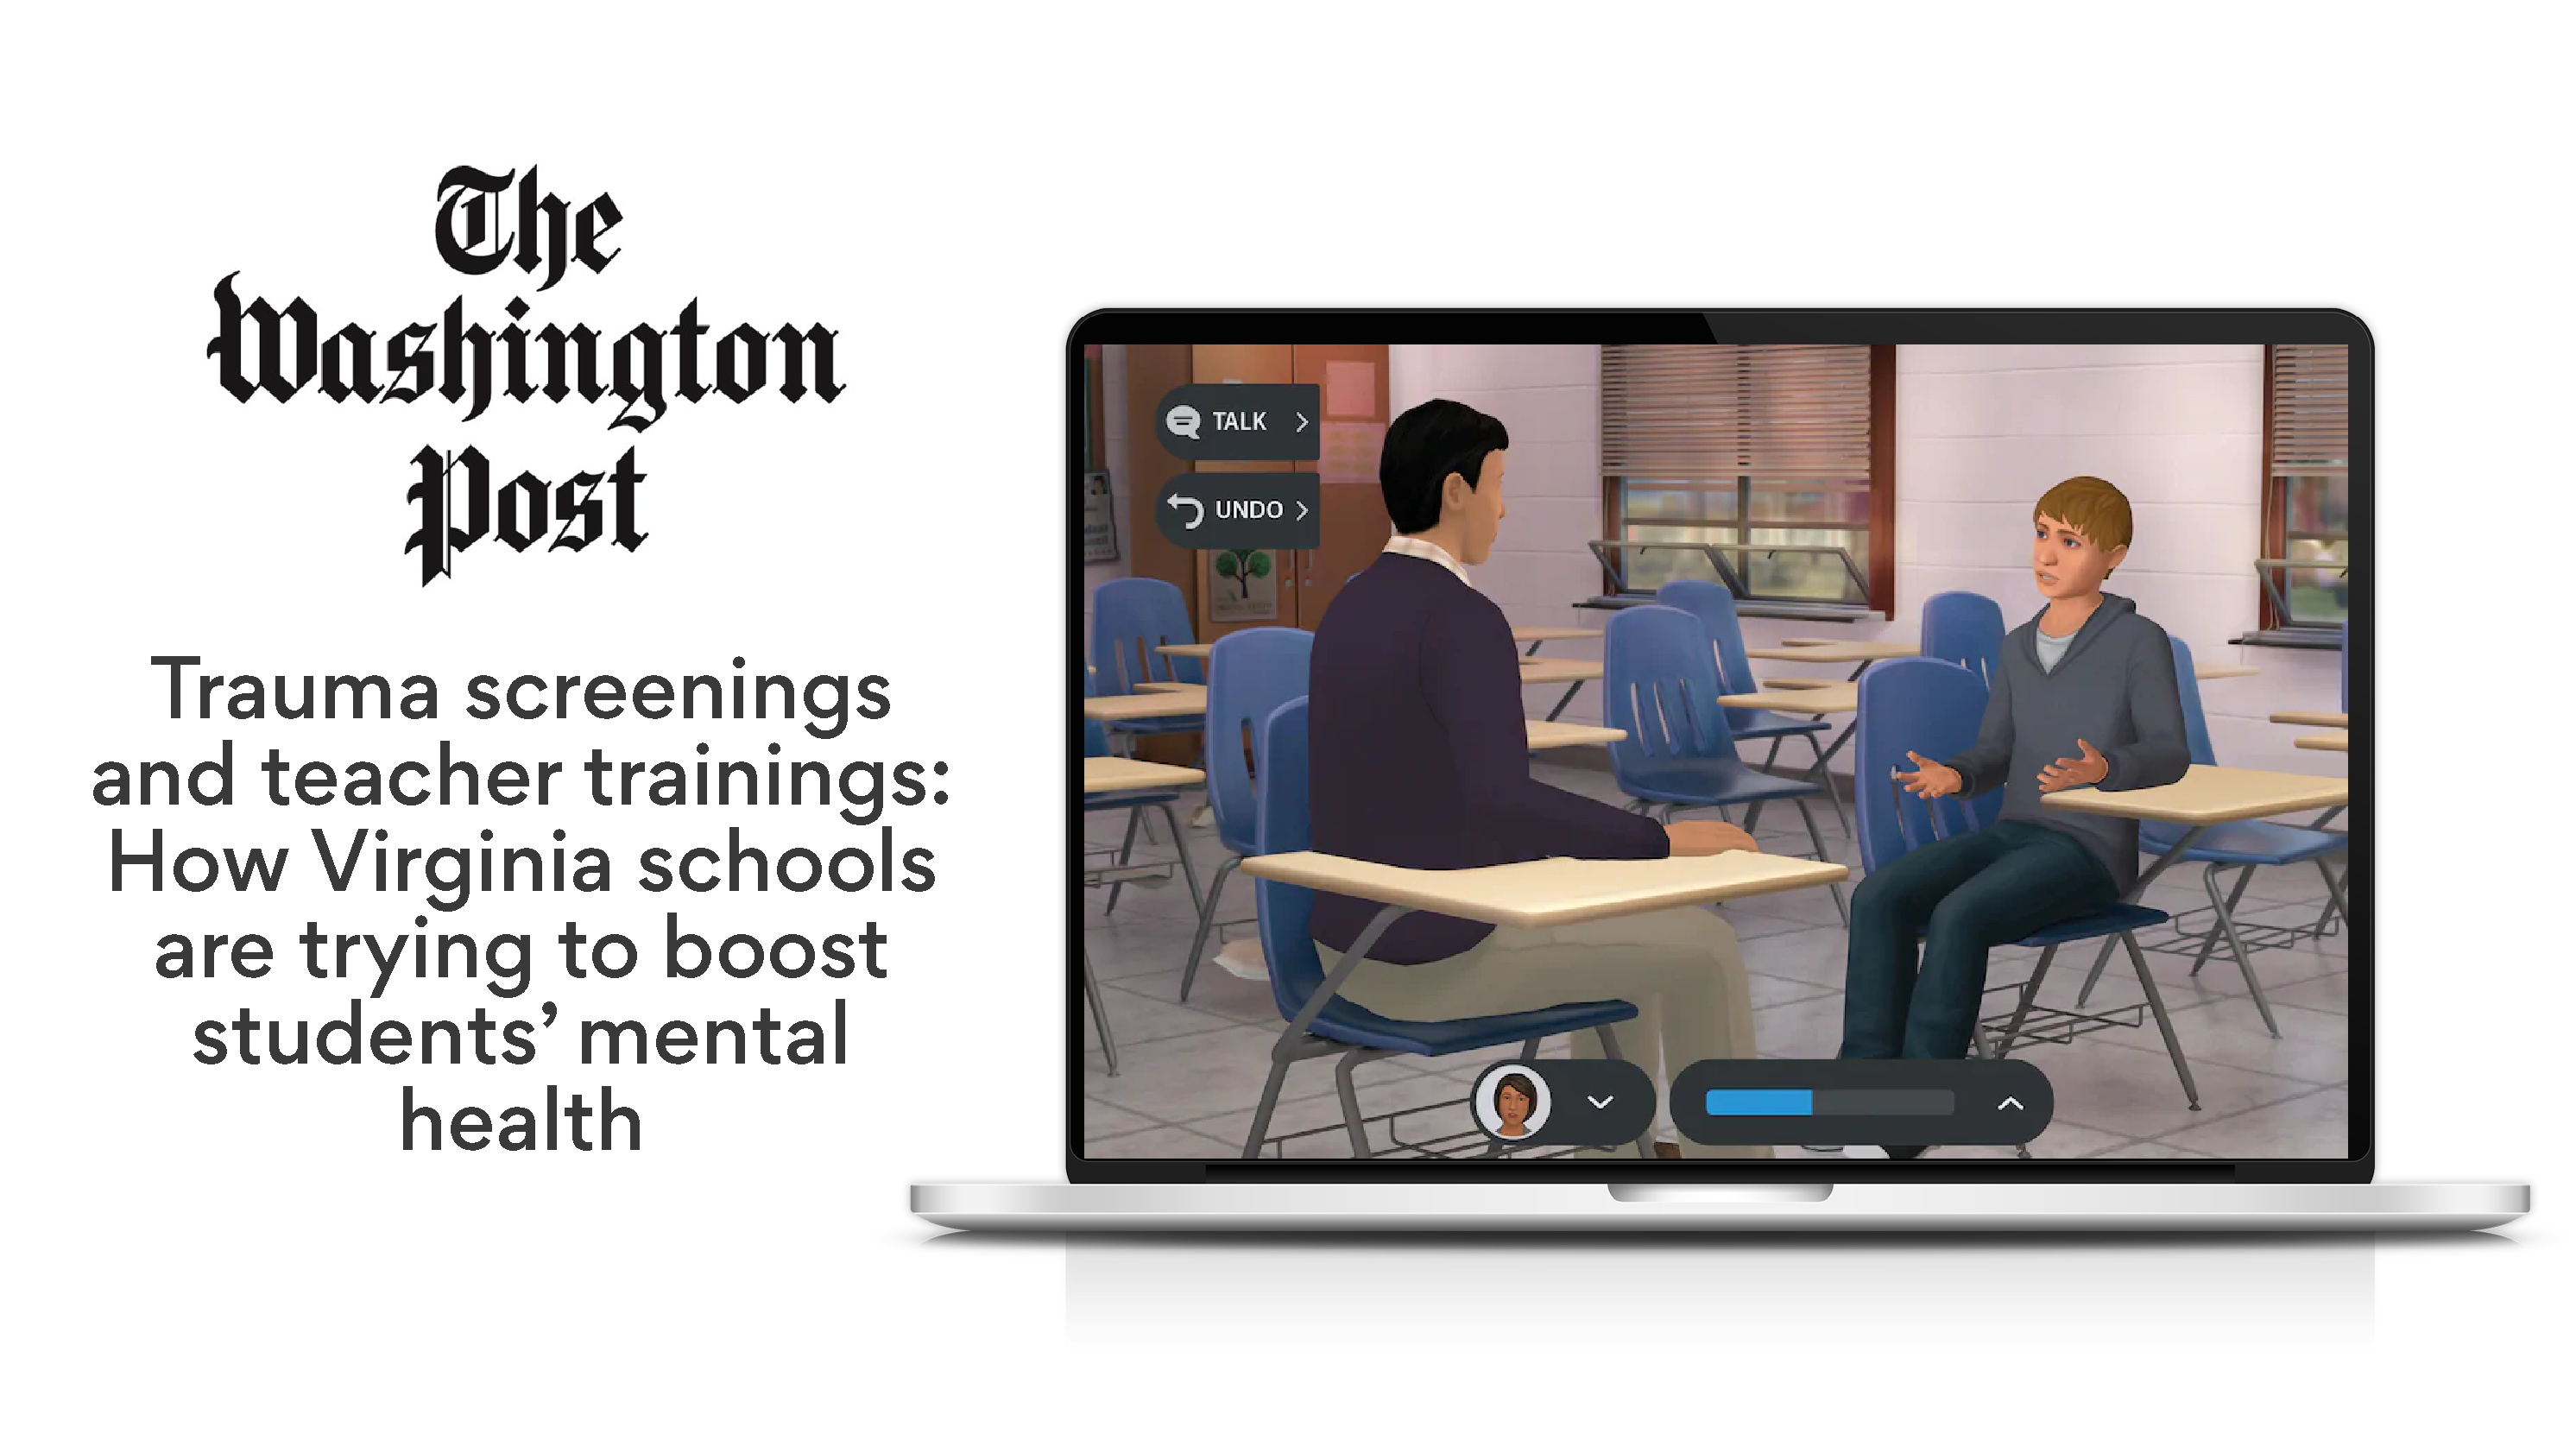 Kognito at Virginia Schools in The Washington Post